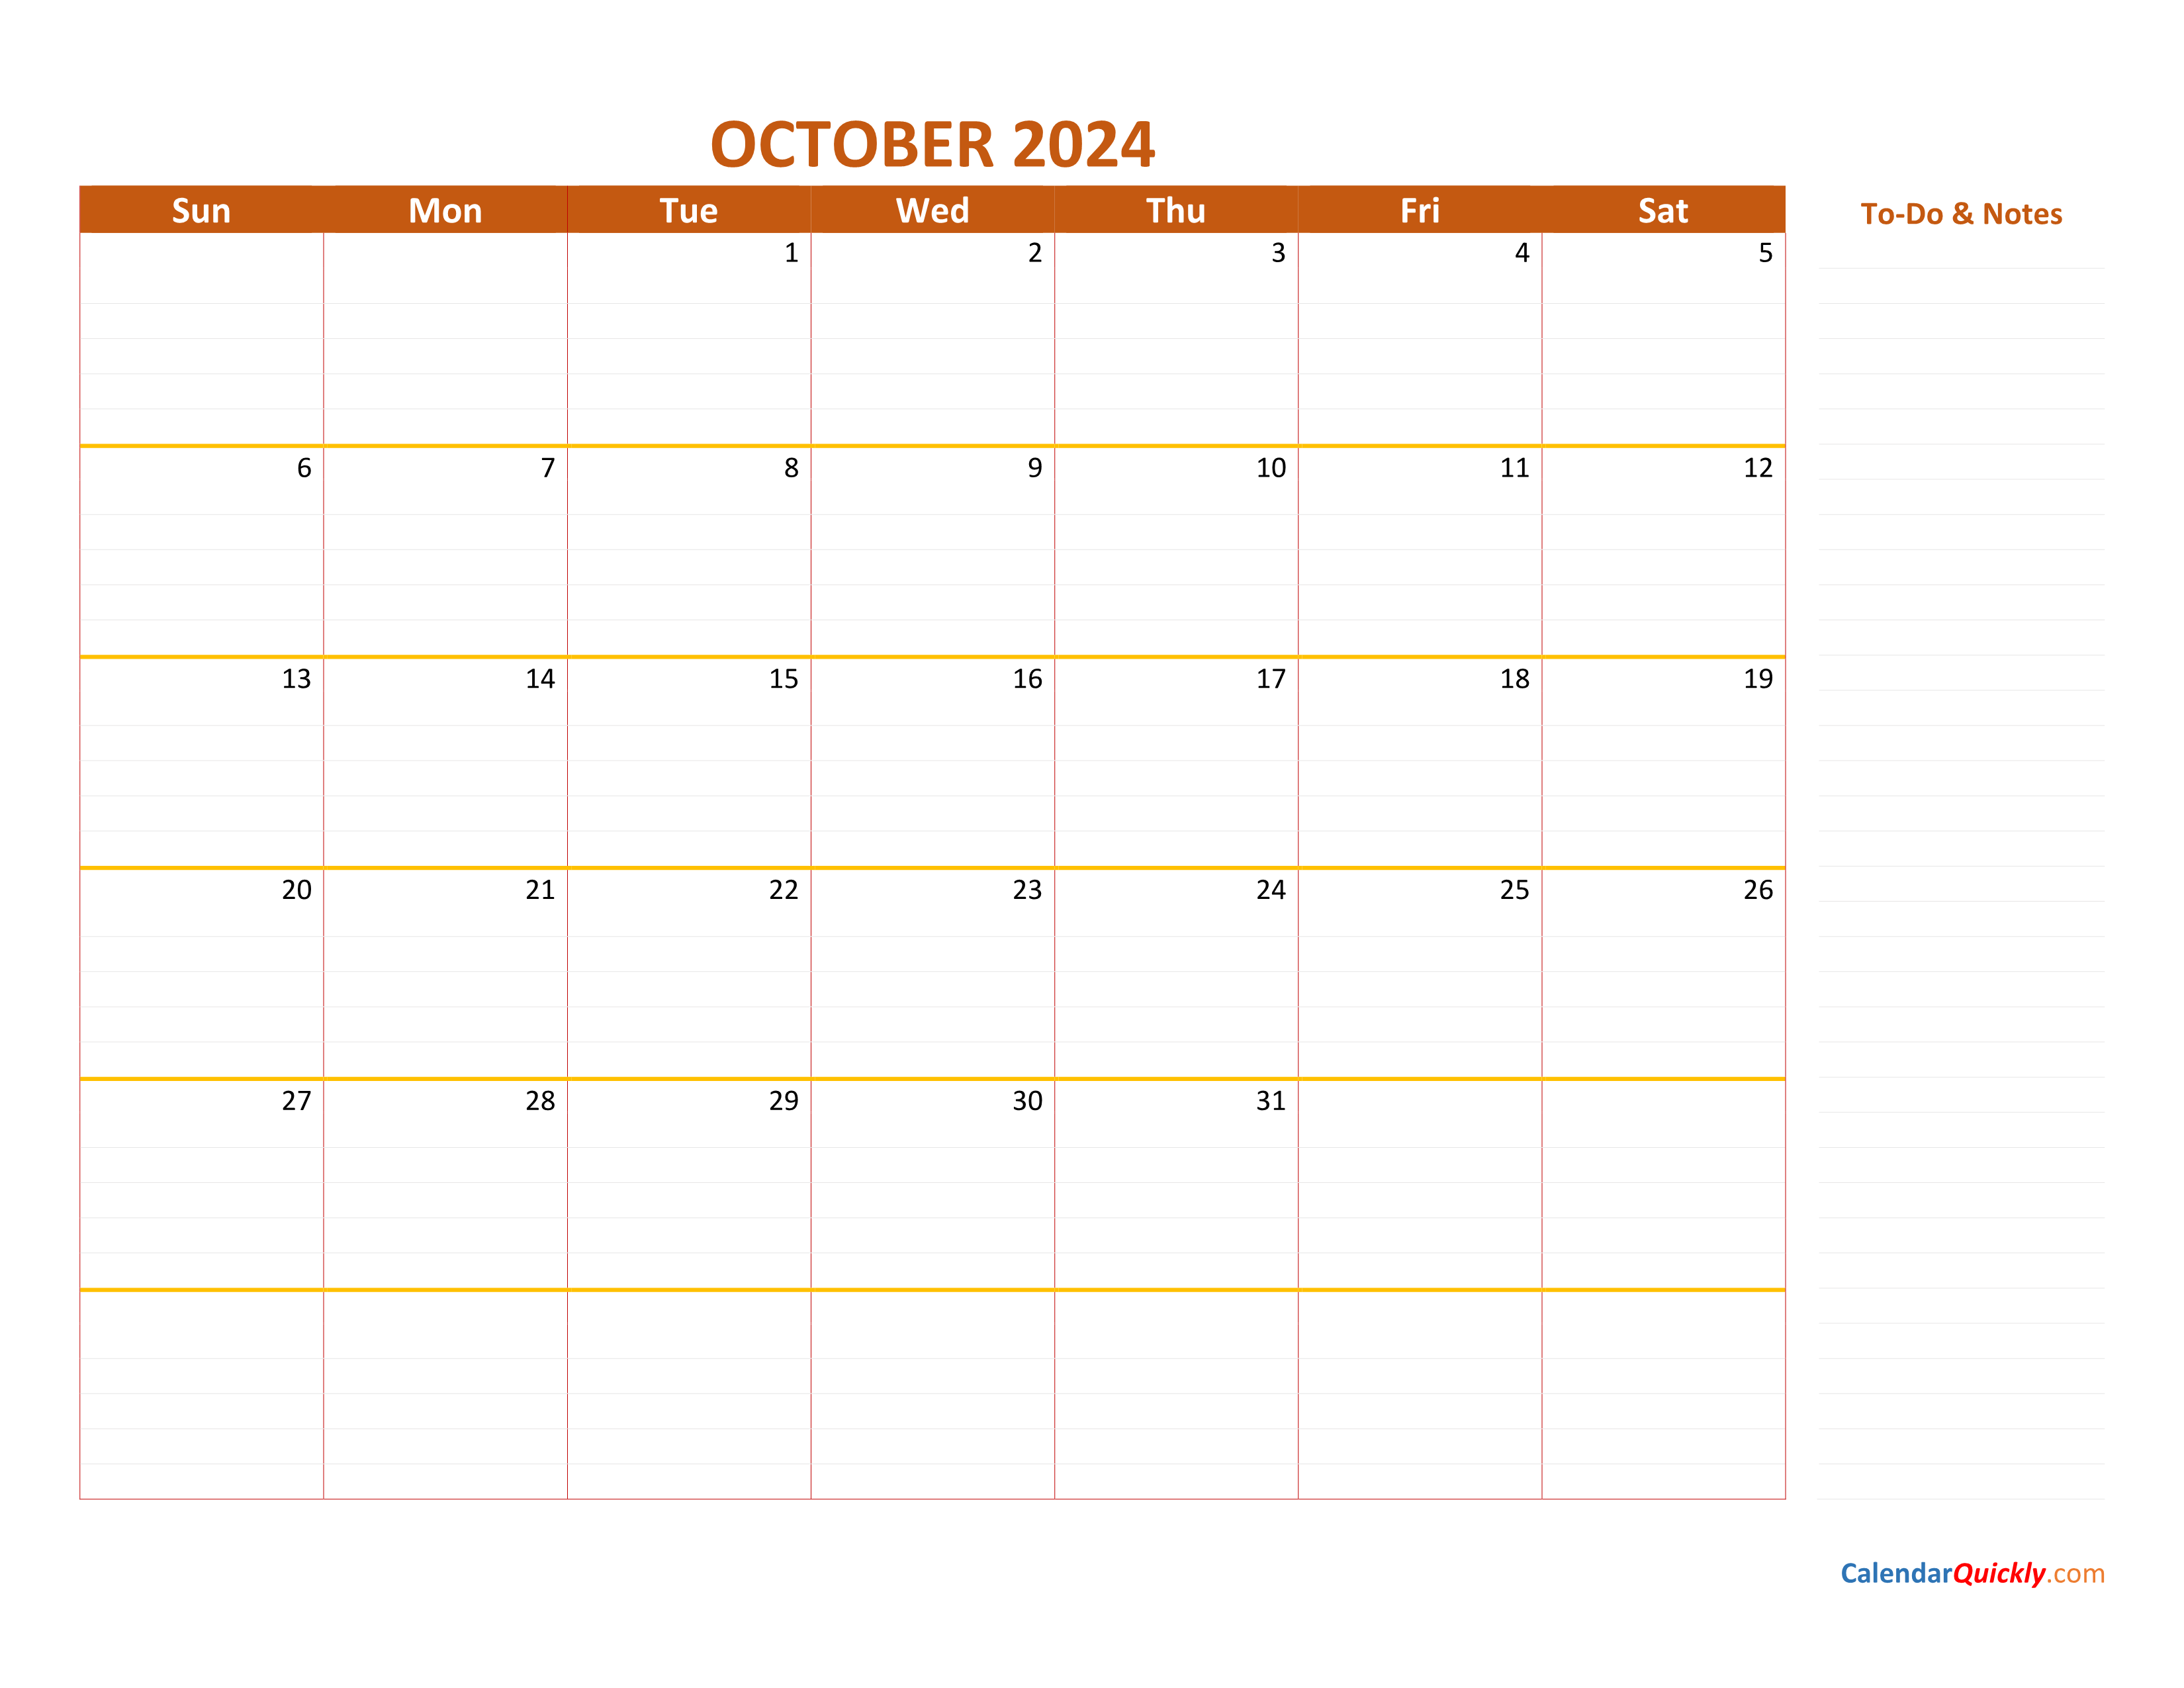 October 2024 Calendar | Calendar Quickly